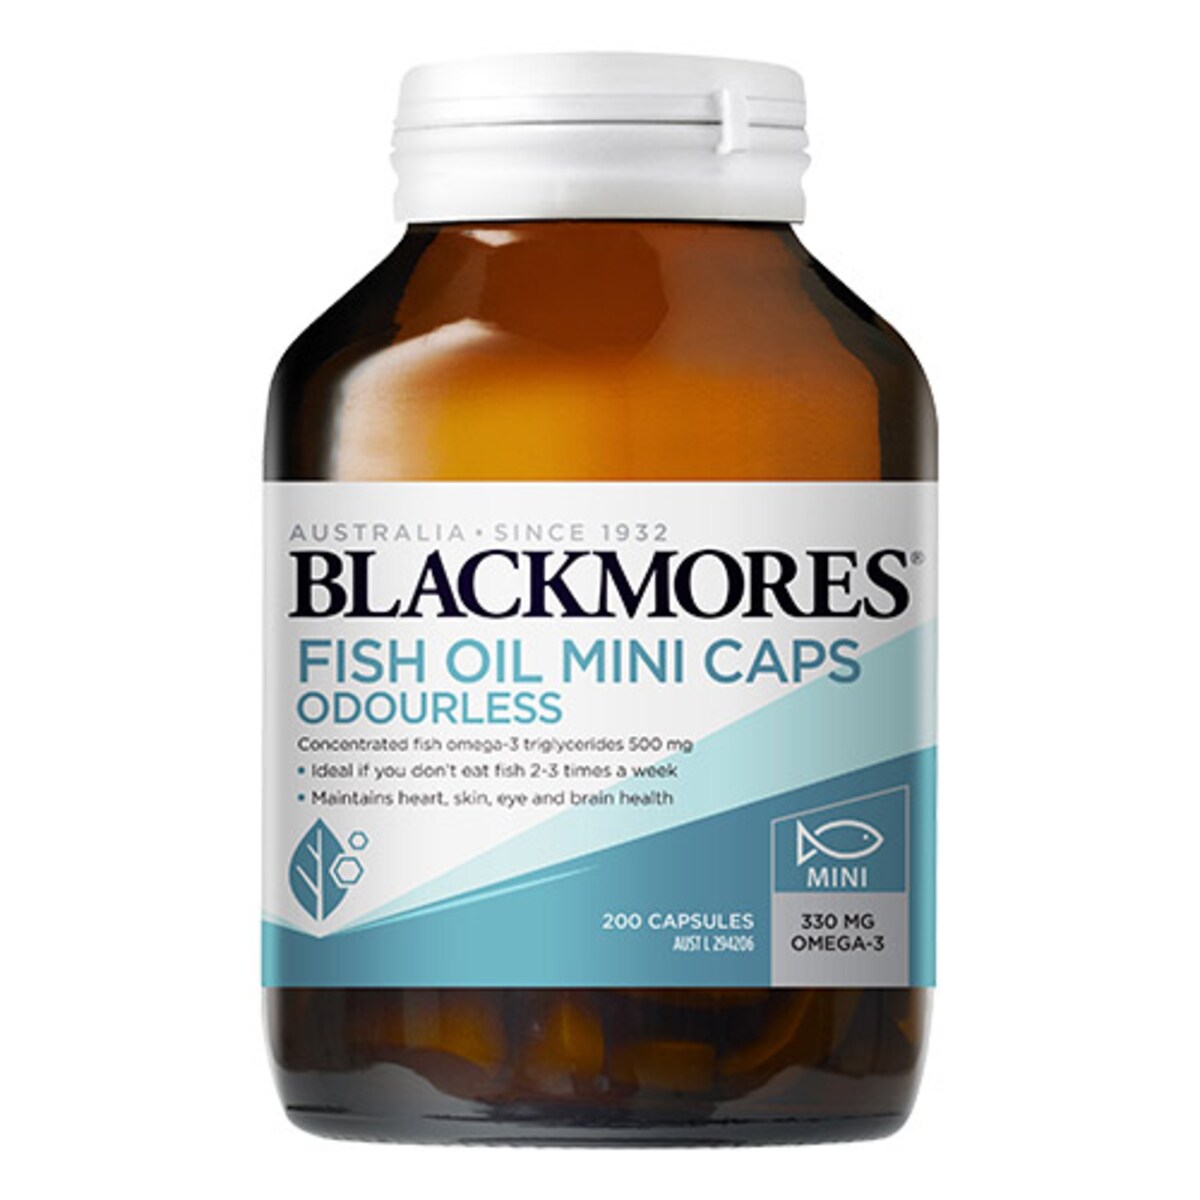 Blackmores Fish Oil Odourless Mini 200 Capsules